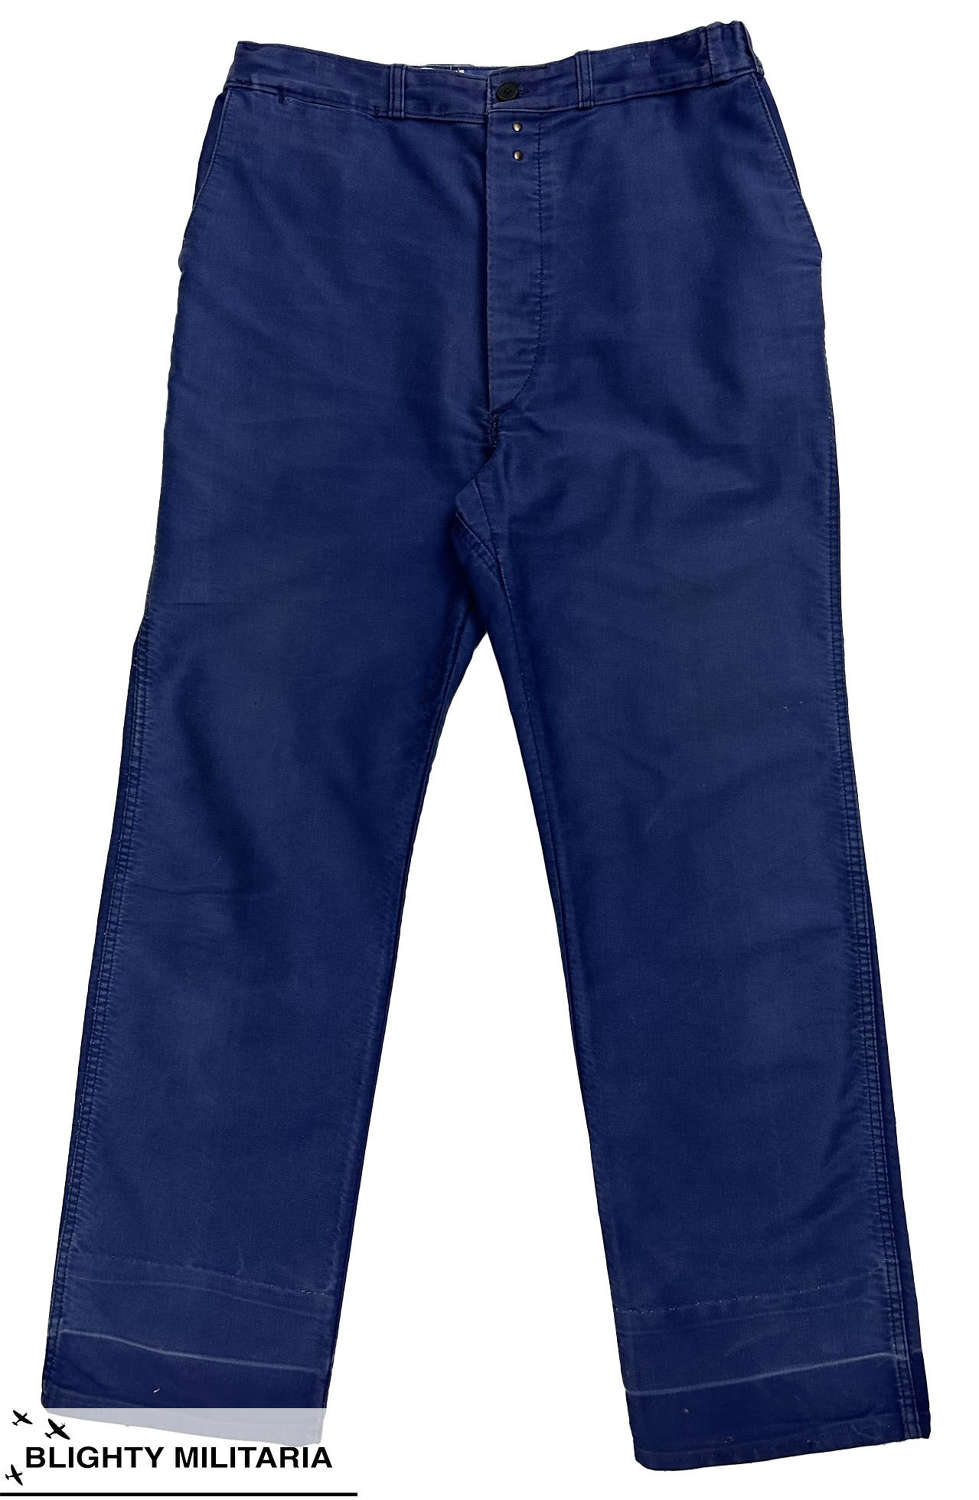 Original 1970s French Blue Moleskin Workwear Trousers - Size 35x31.5